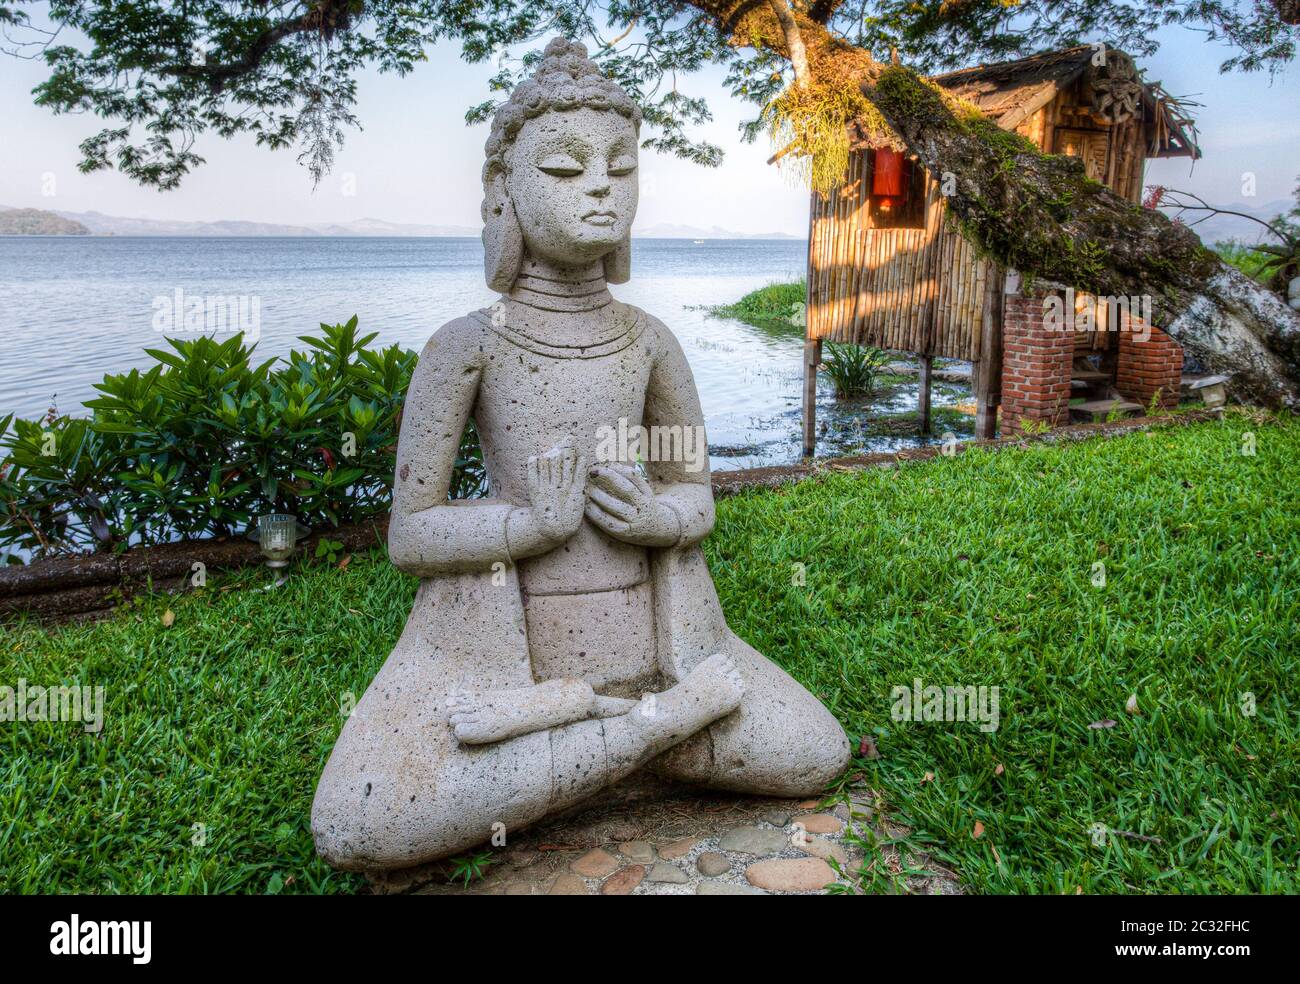 Stone sculpture of an oriental woman in a Buddha pose near Lake Catemaco, Veracruz, Mexico. Stock Photo